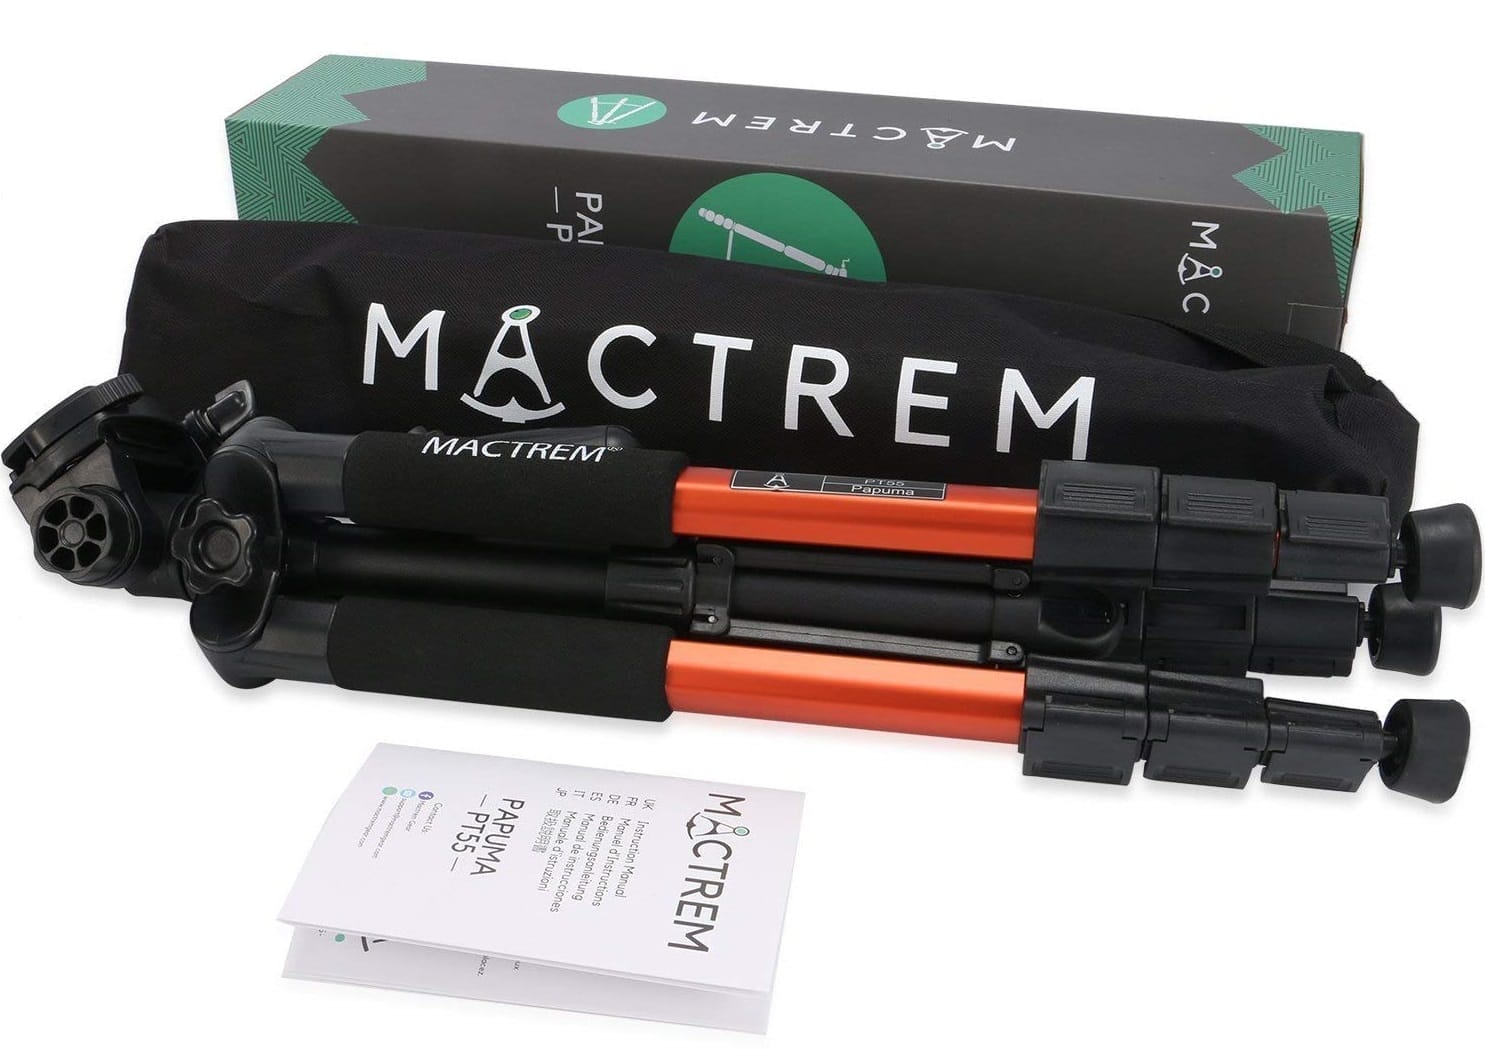 Mactrem PT55 Camera Tripod - My Helpful Hints® - Review